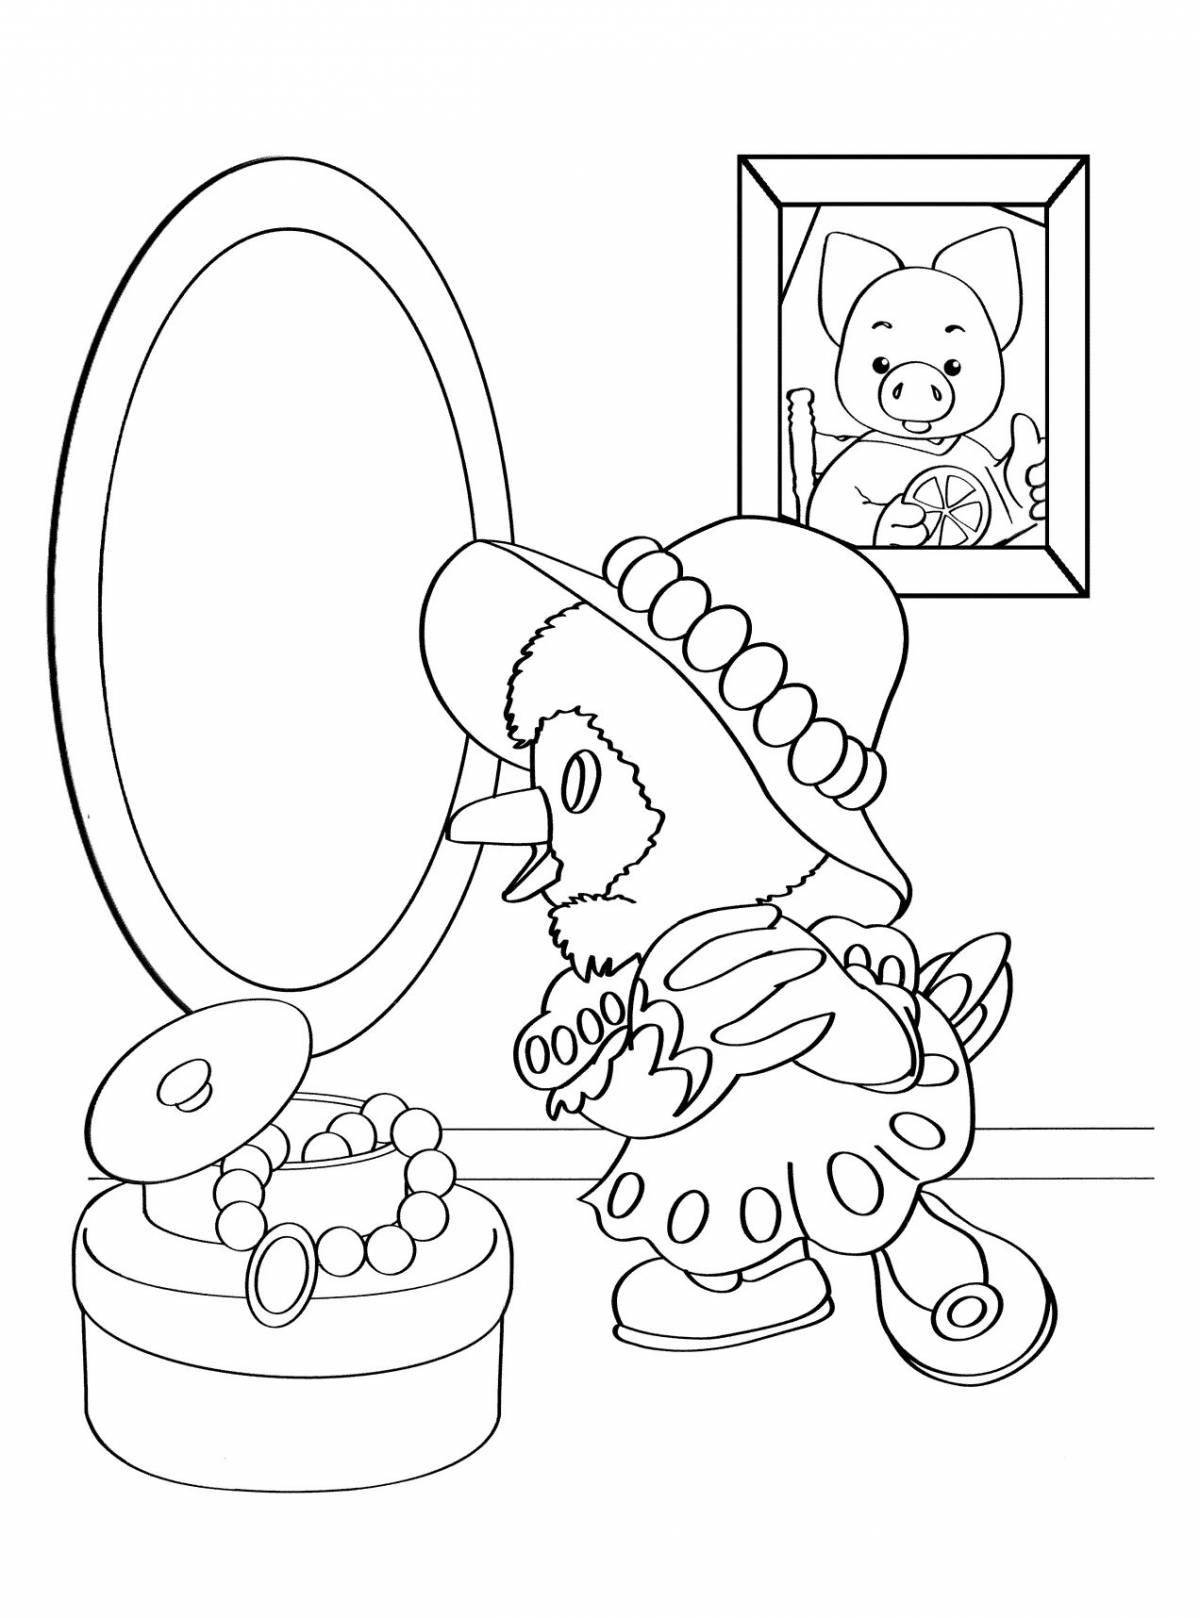 Fun mirror coloring for kids